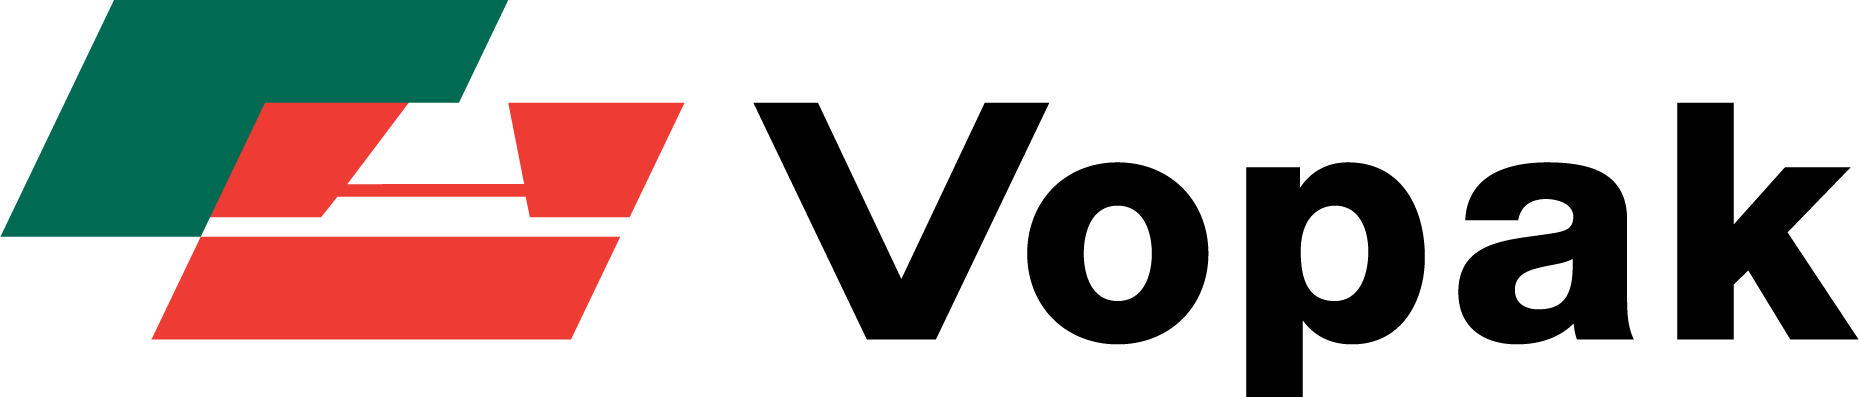 Vopak logo [Converted]